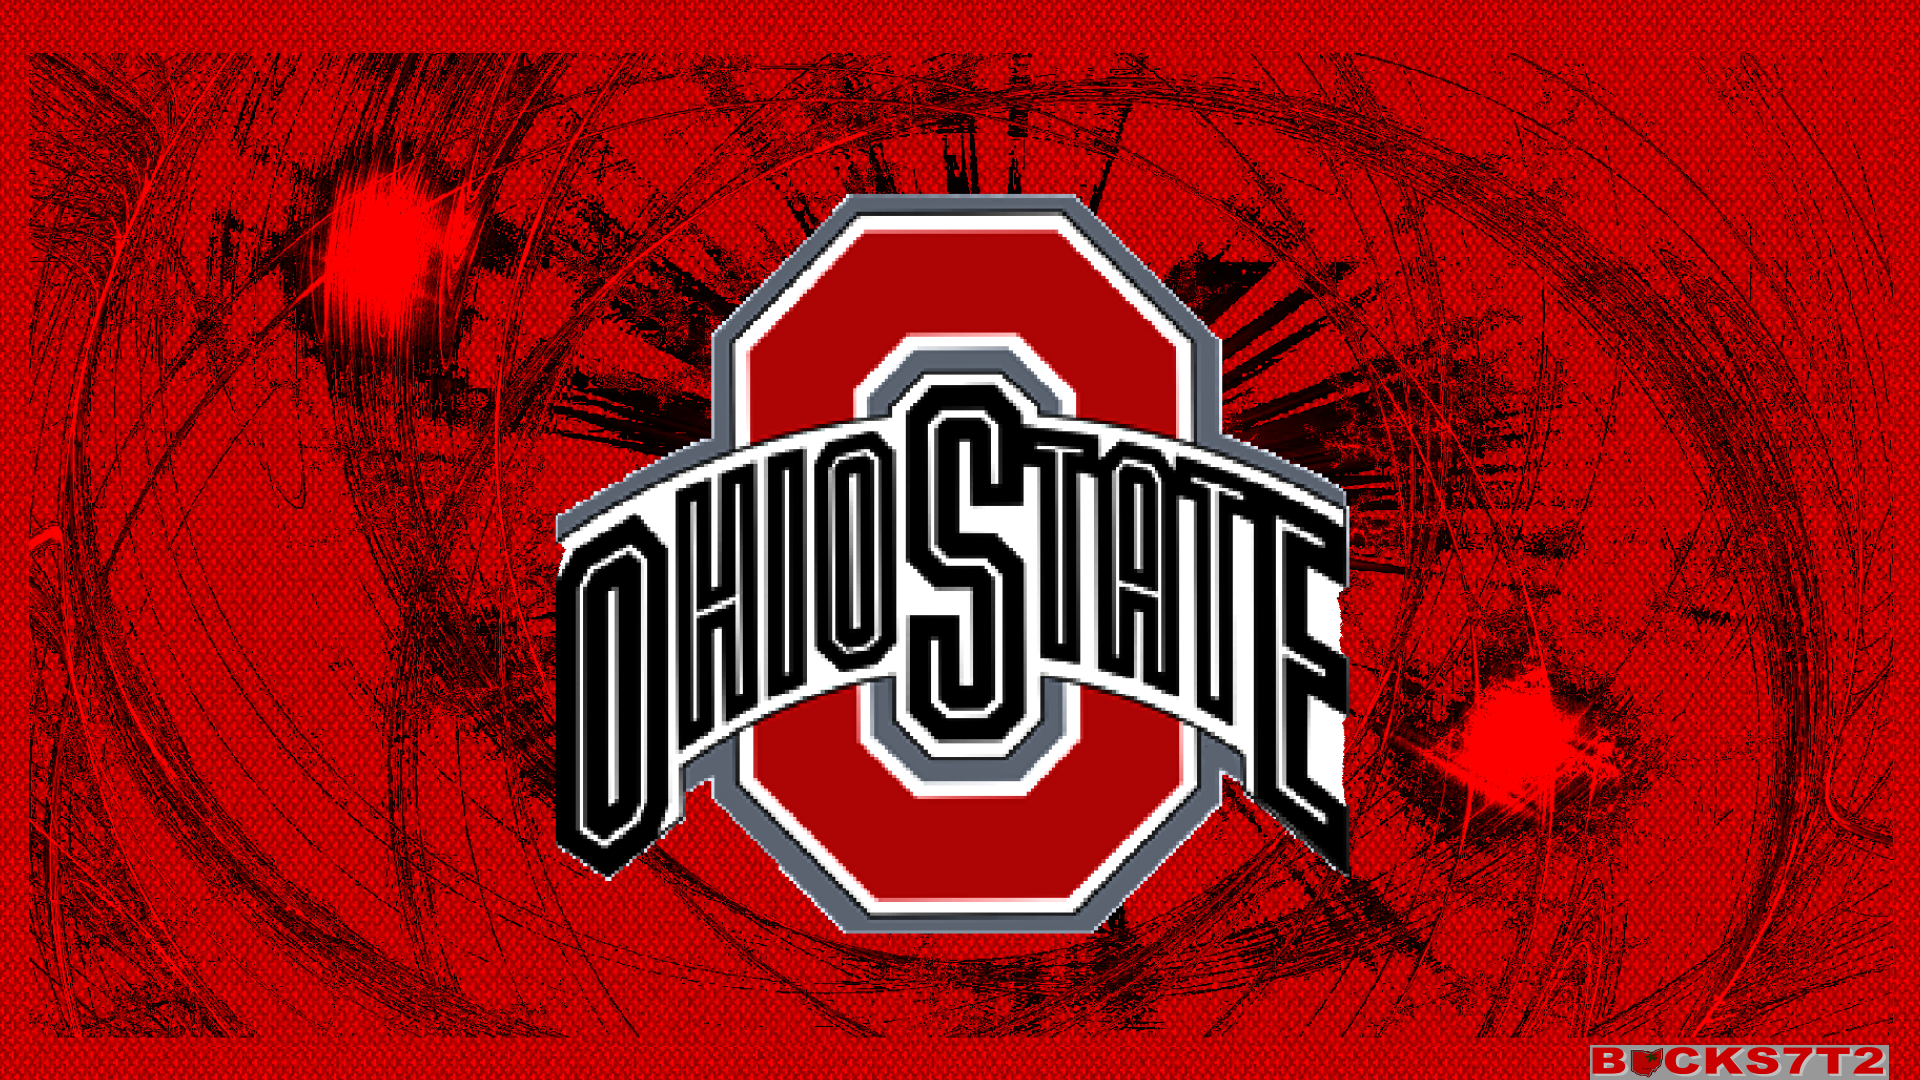 RED BLOCK O OHIO STATE Ohio State University Basketball Wallpaper